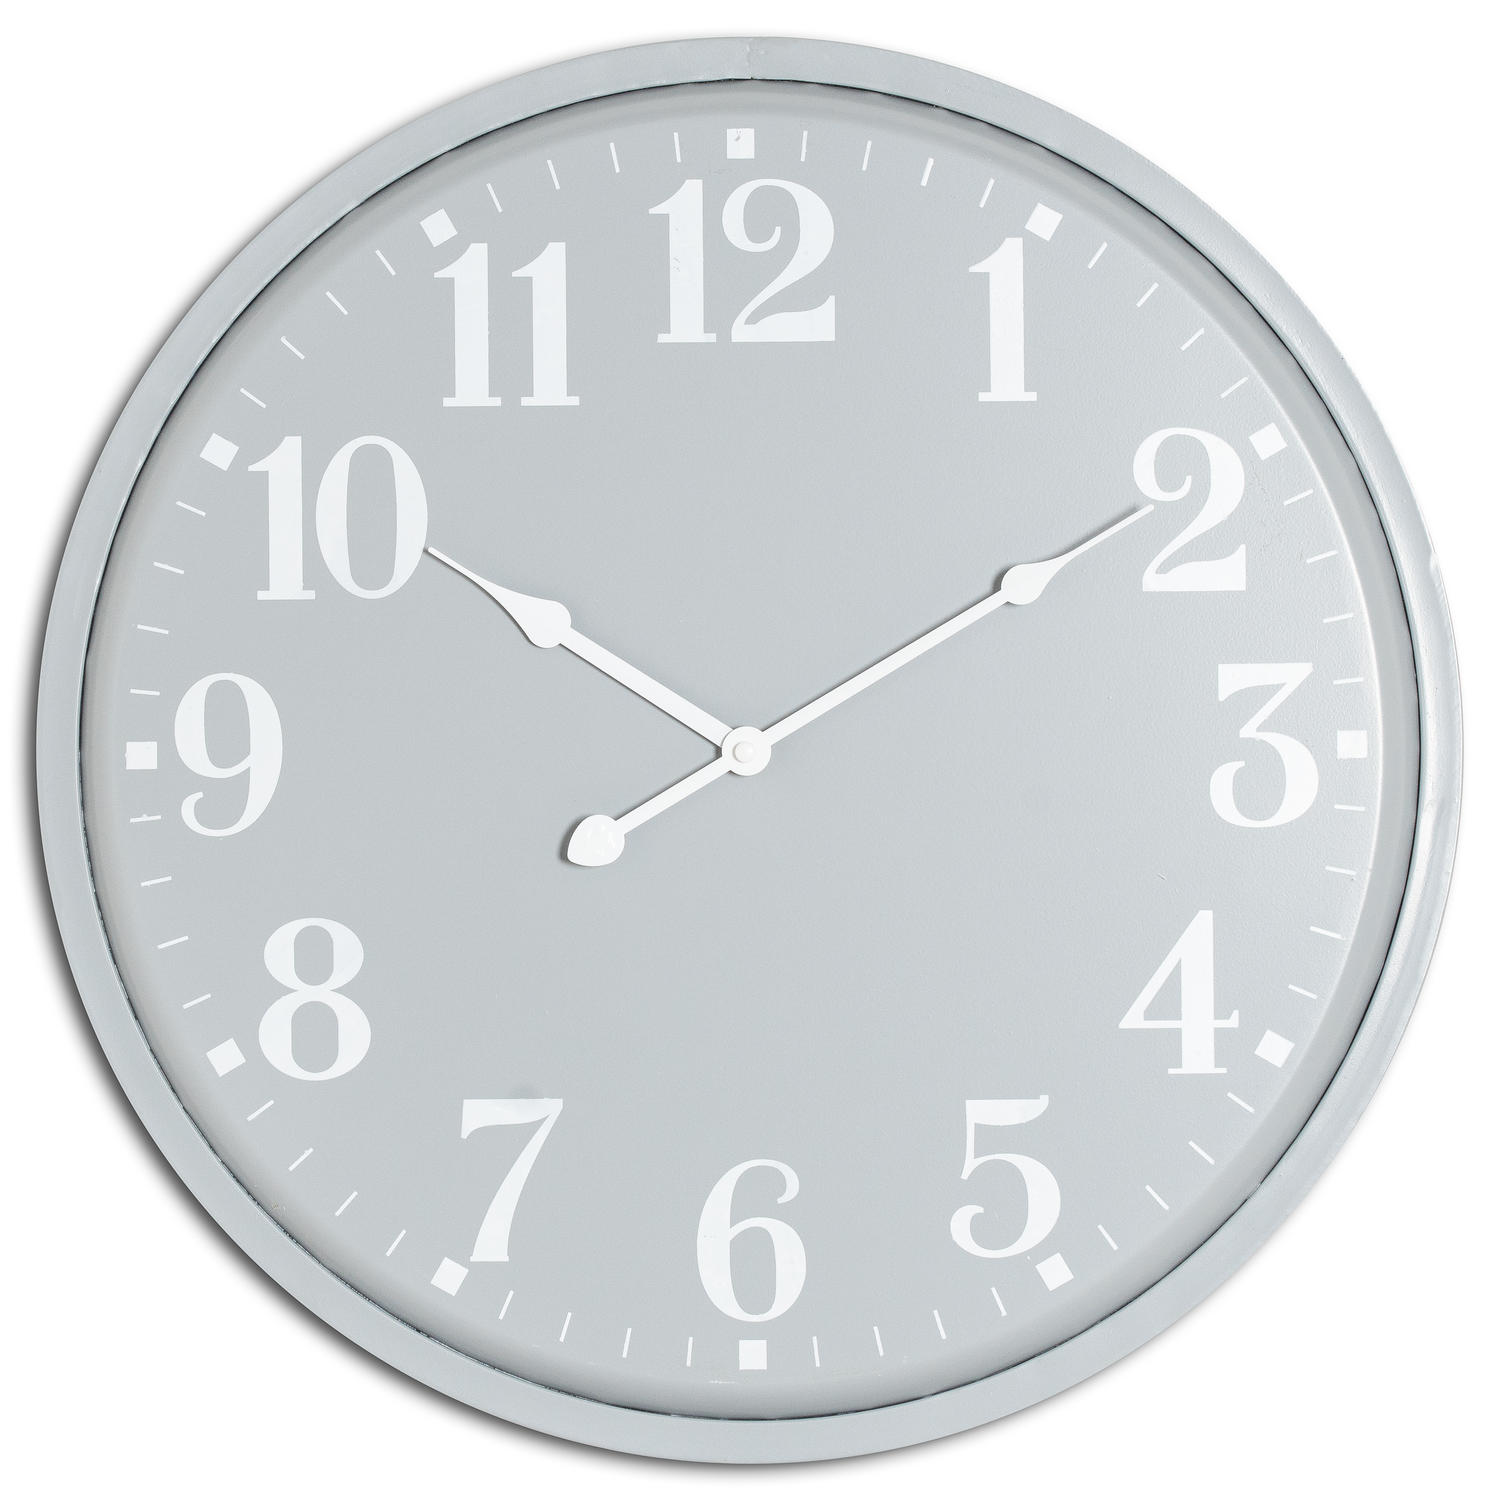 Ashmount Wall Clock - Image 1